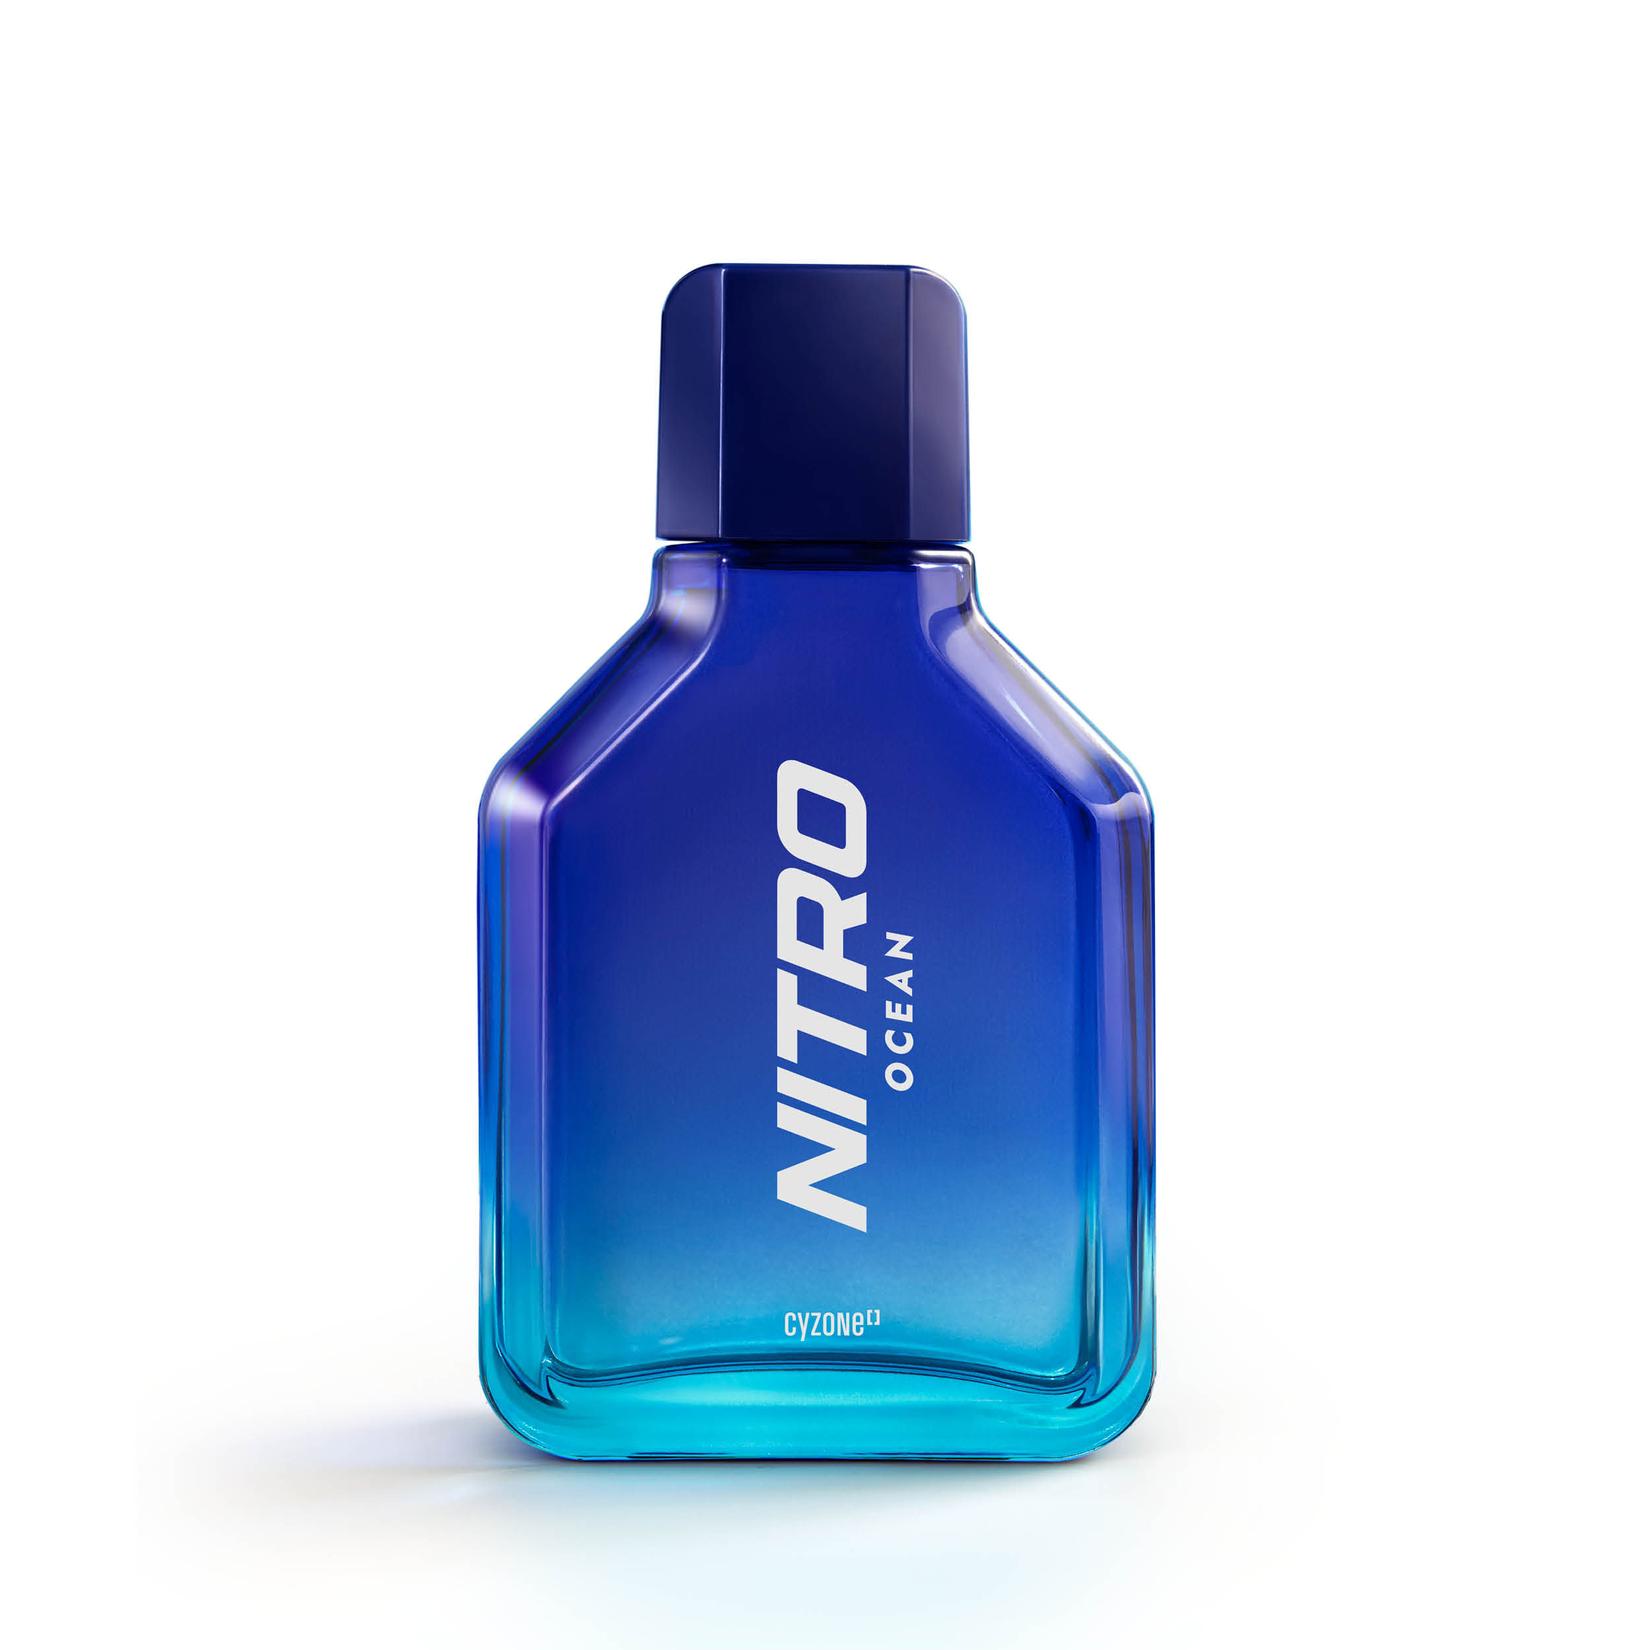 Oferta de Perfume de Hombre Nitro Ocean, 90 ml por S/ 73,5 en Cyzone